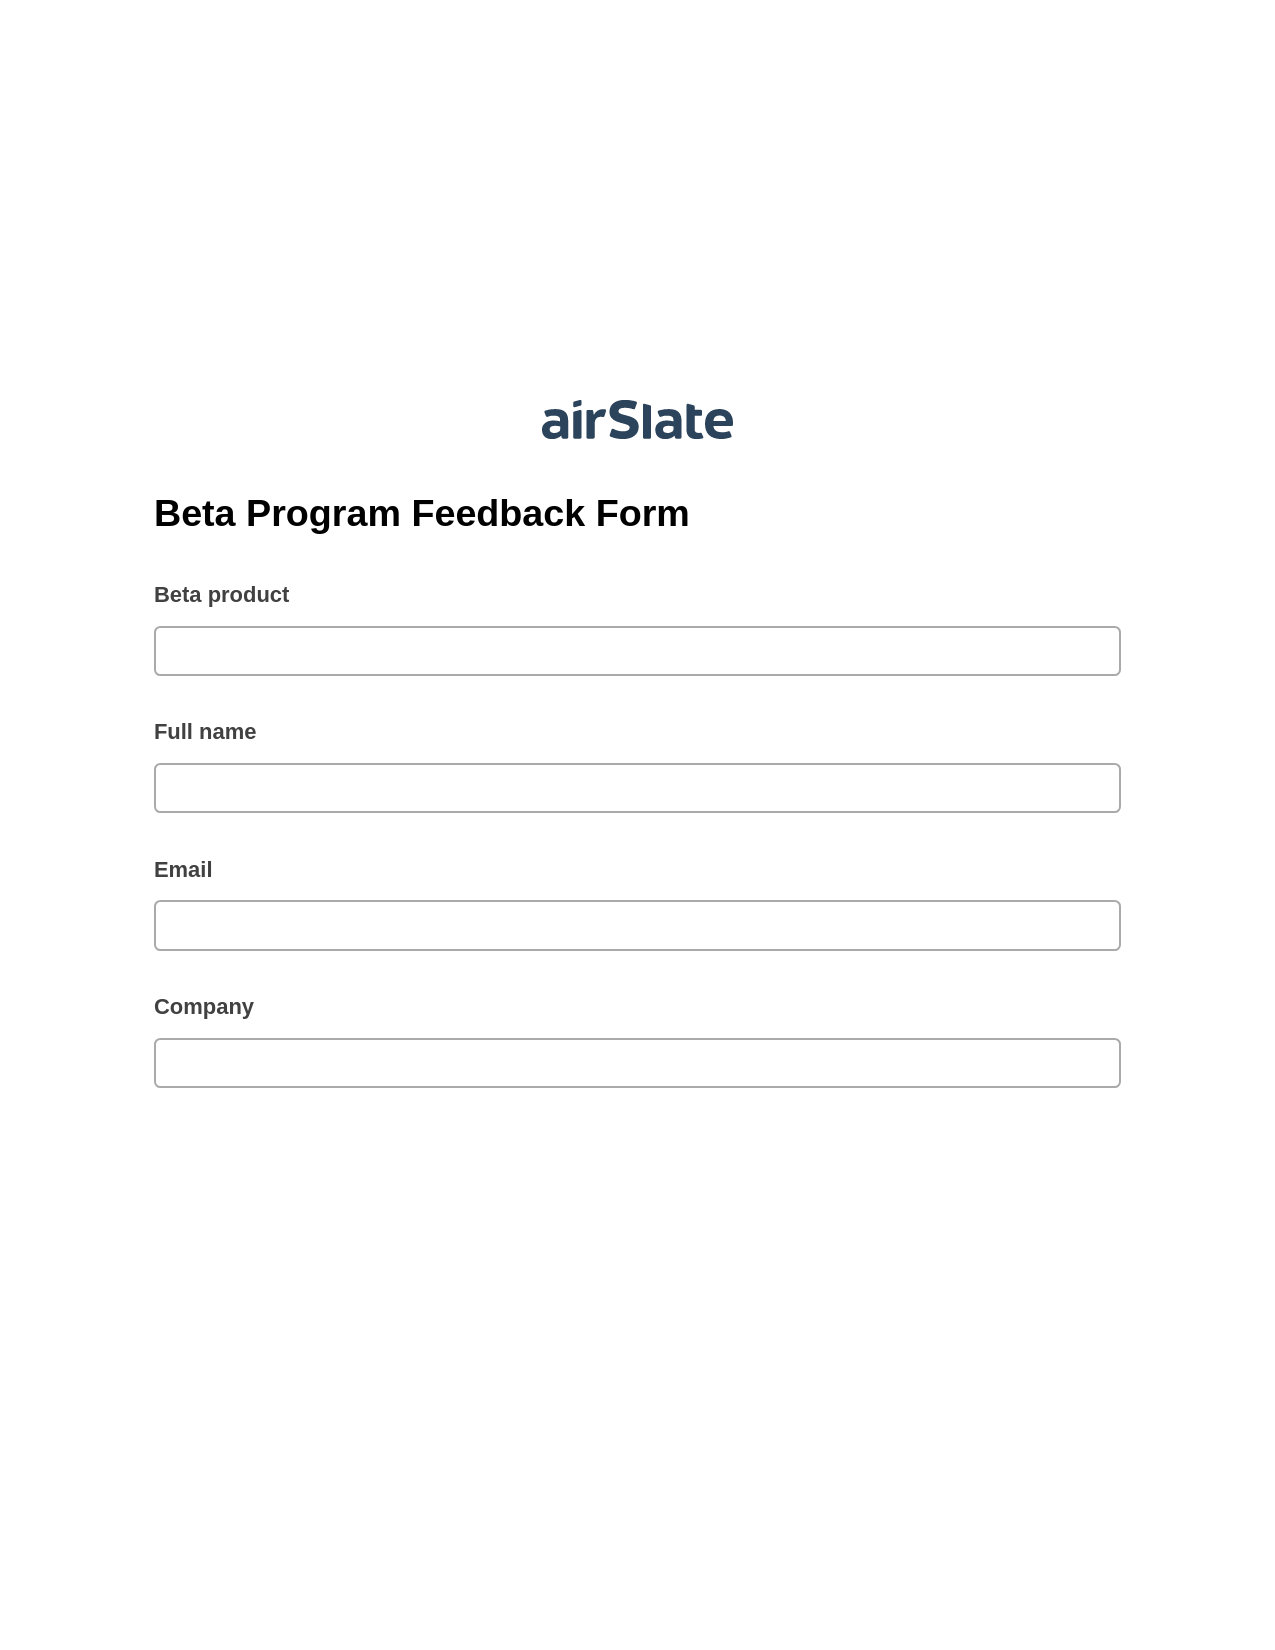 Beta Program Feedback Form Pre-fill Slate from MS Dynamics 365 Records Bot, Invoke Salesforce Process Bot, Post-finish Document Bot